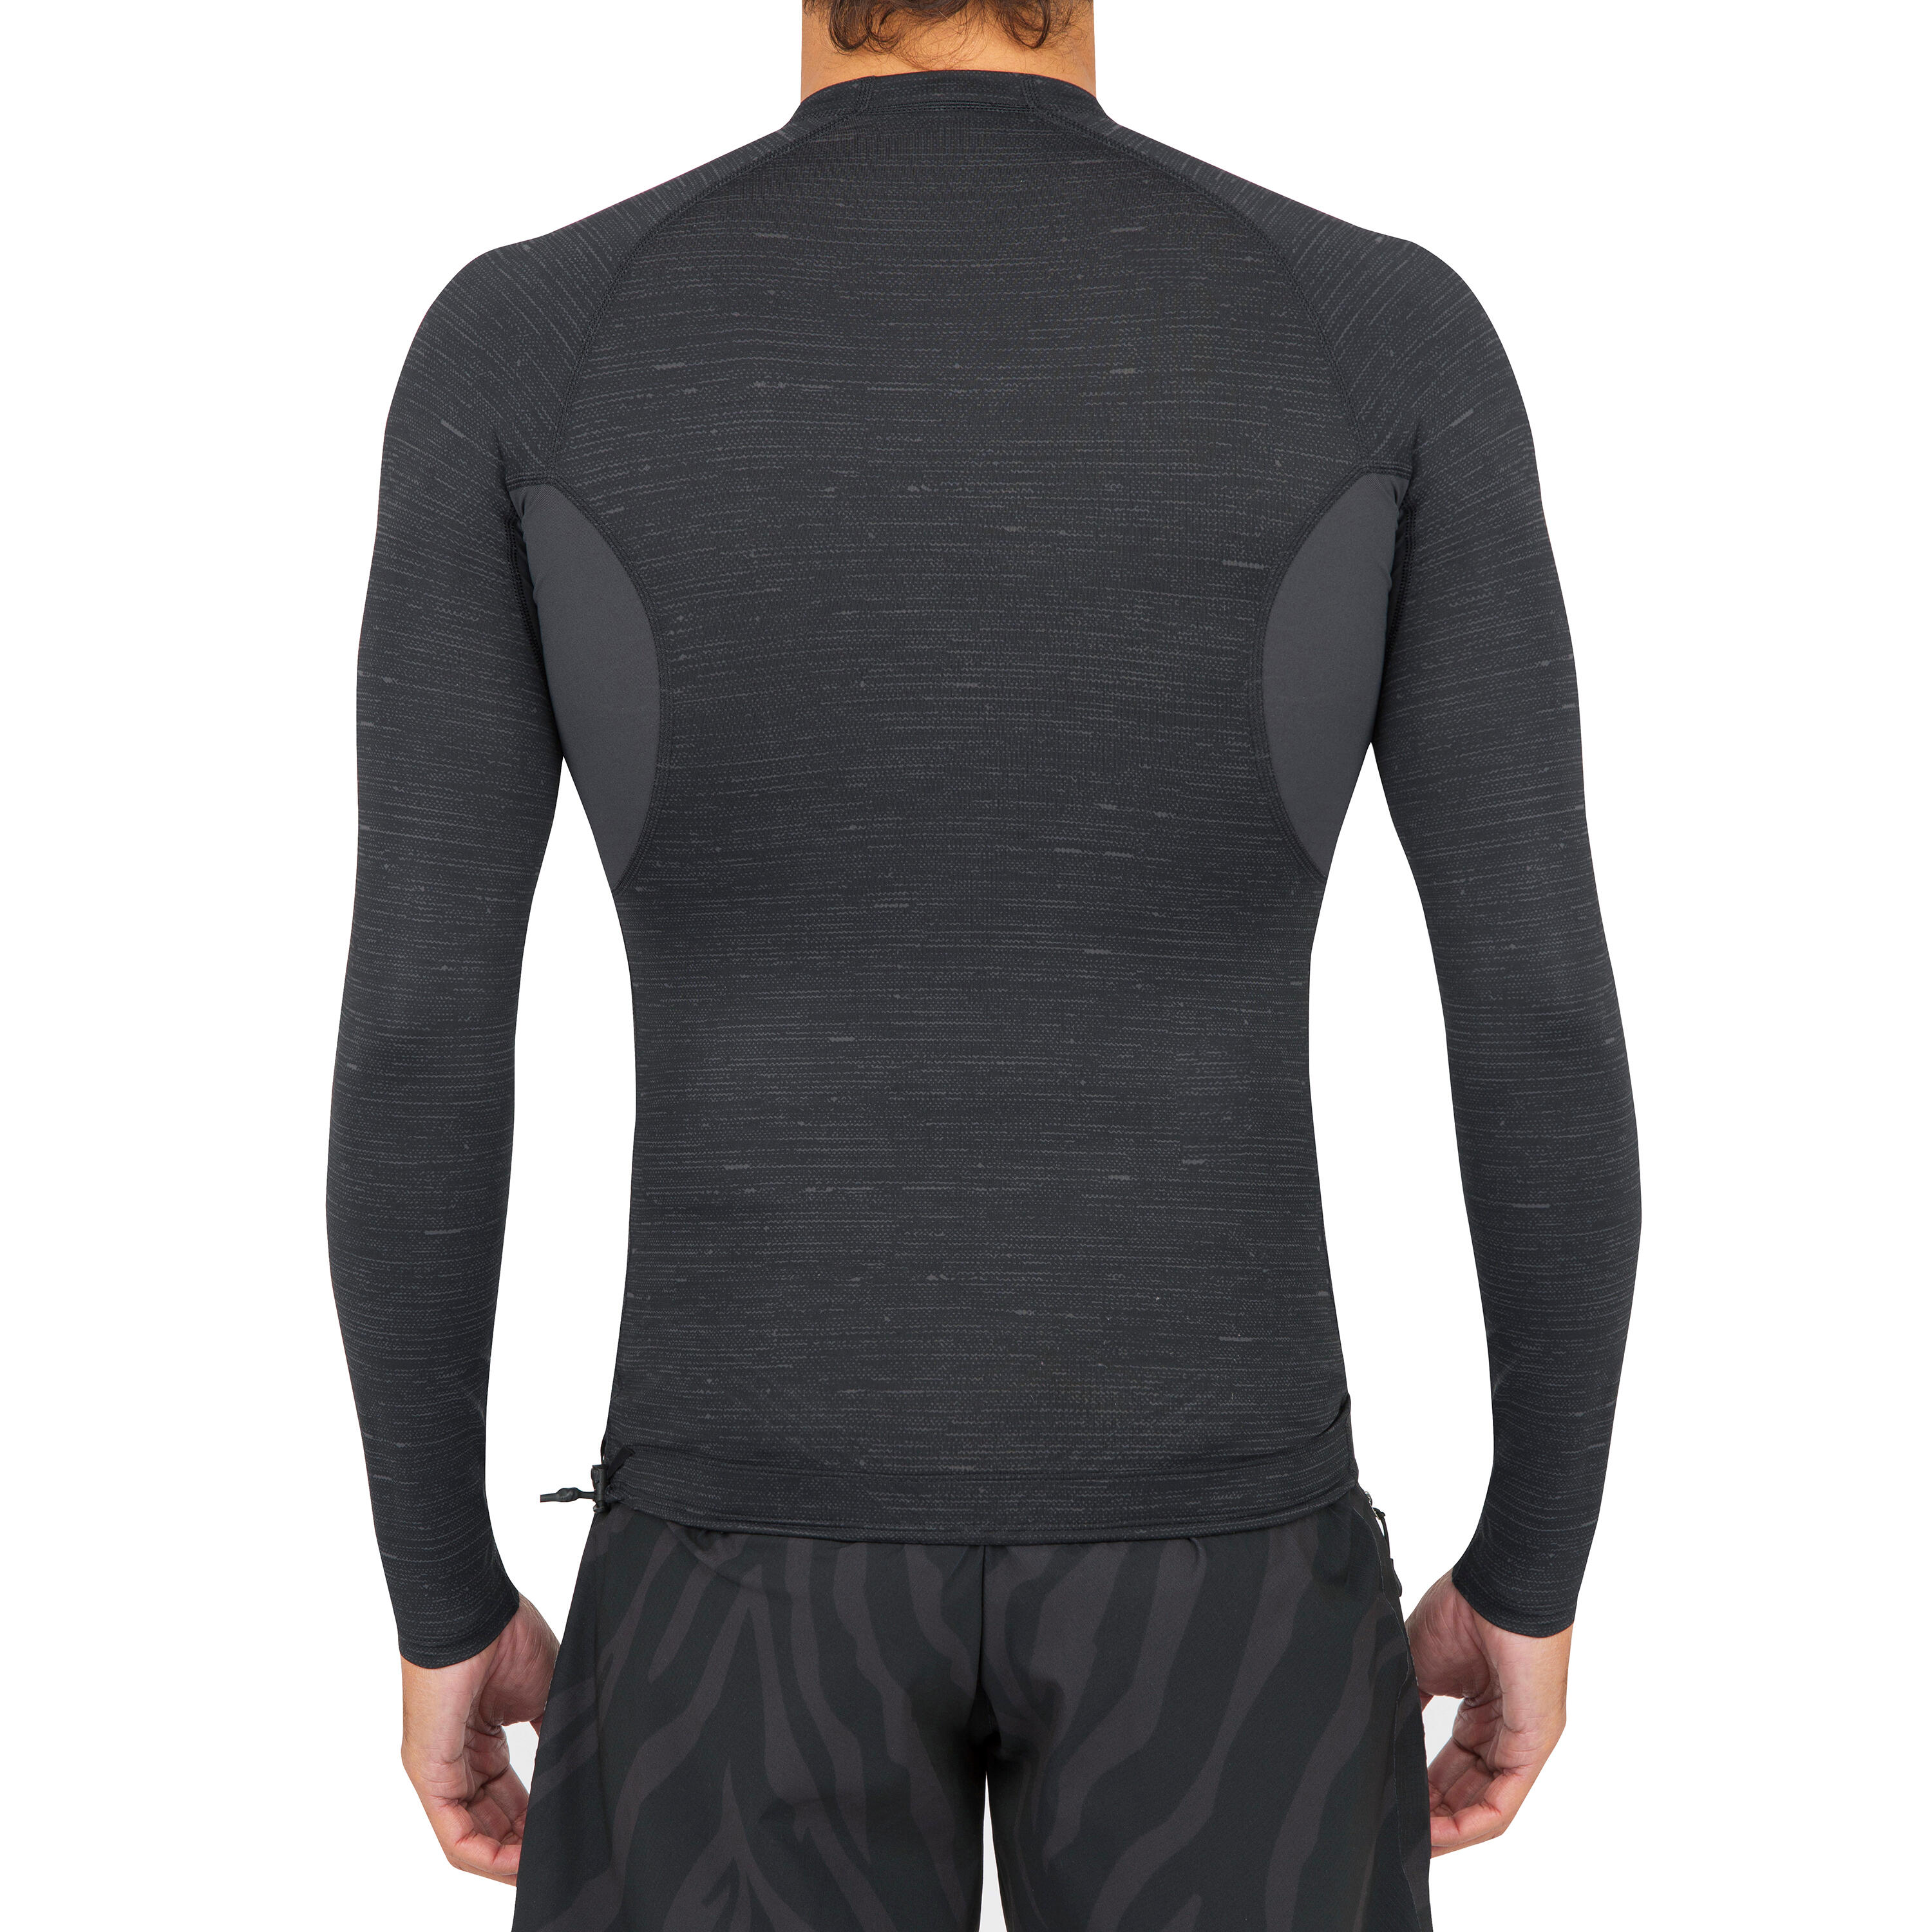 Men's Surfing Long Sleeve UV Protection Top T-Shirt 900 - Black 11/12